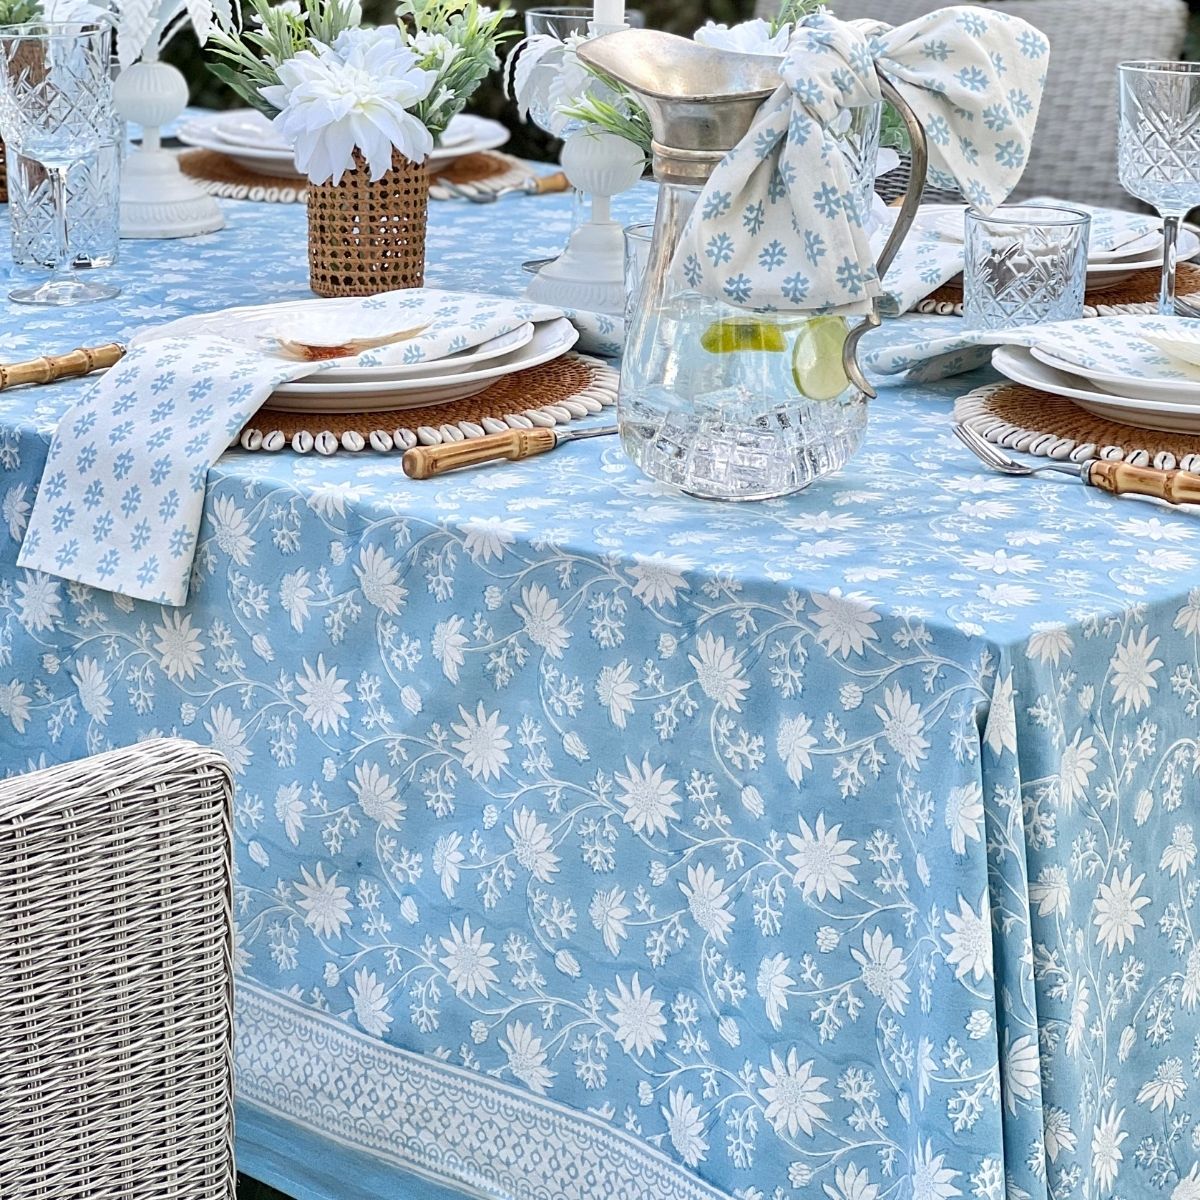 Flannel flower sky blue tablecloth ©